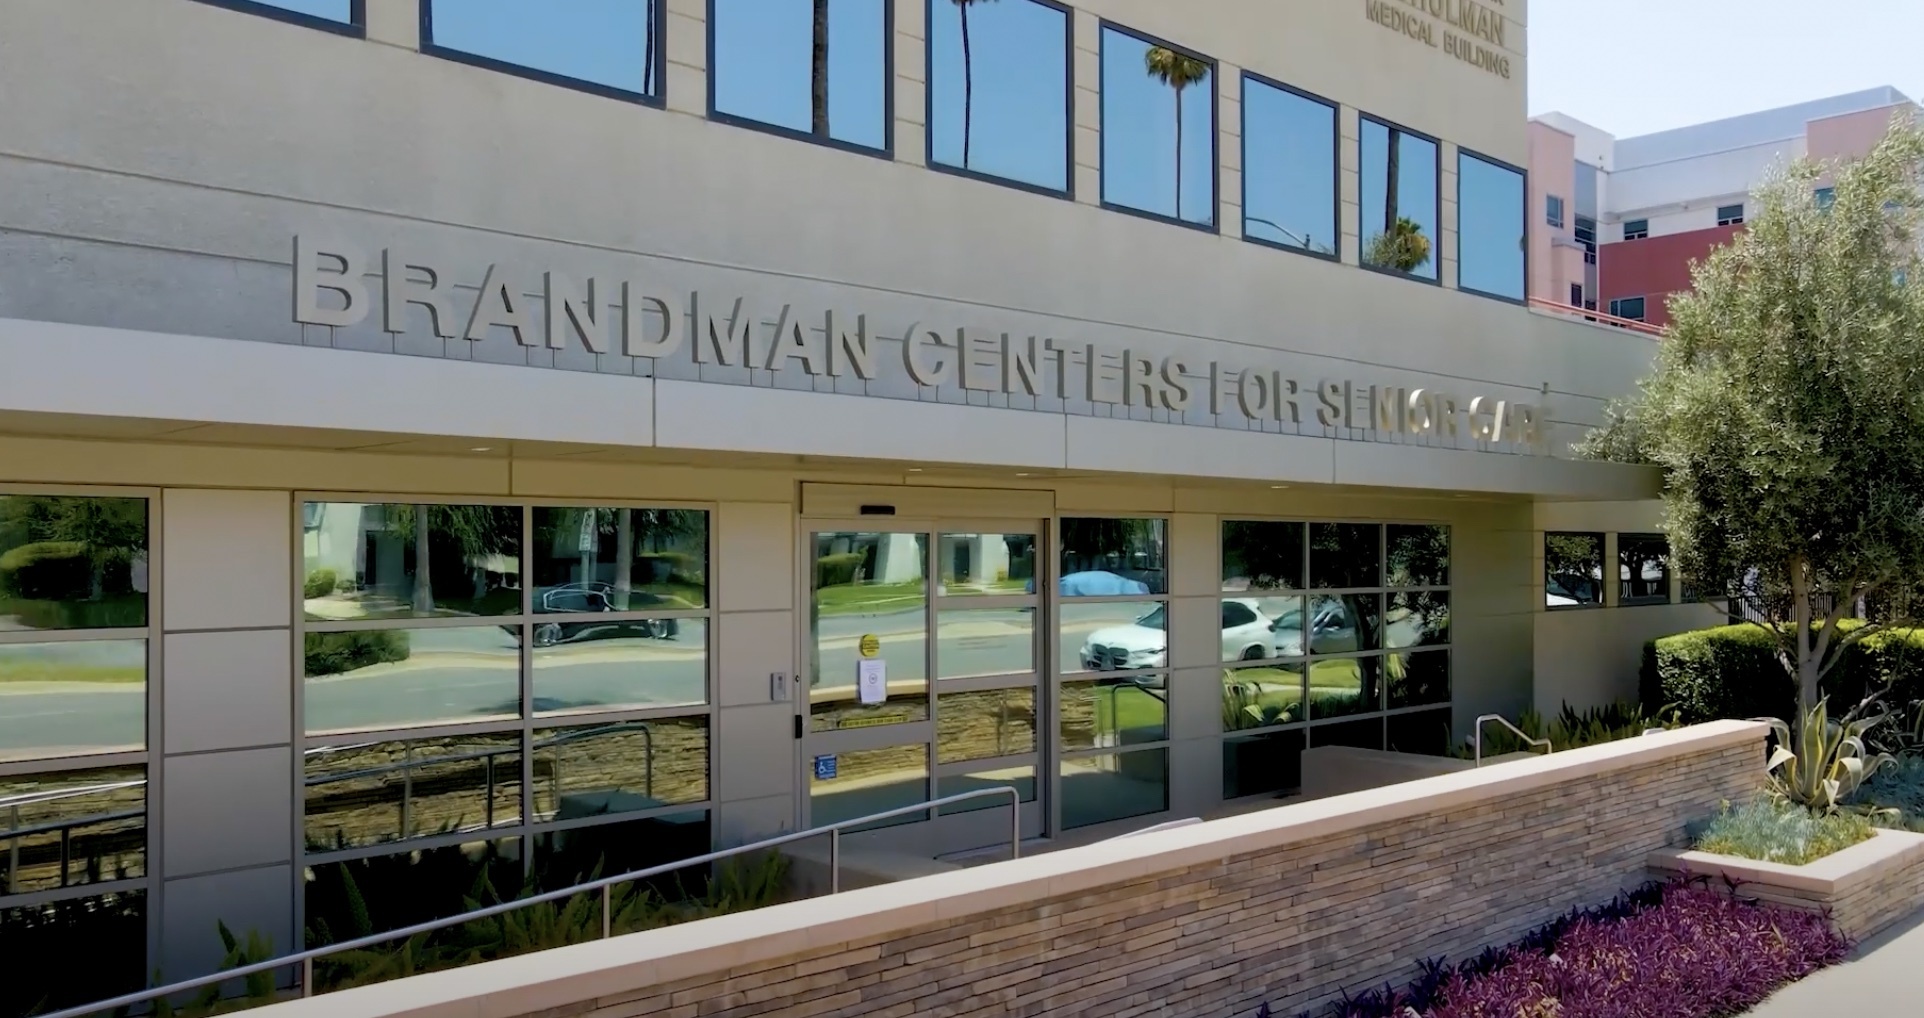 Brandman Centers for Senior Care Building